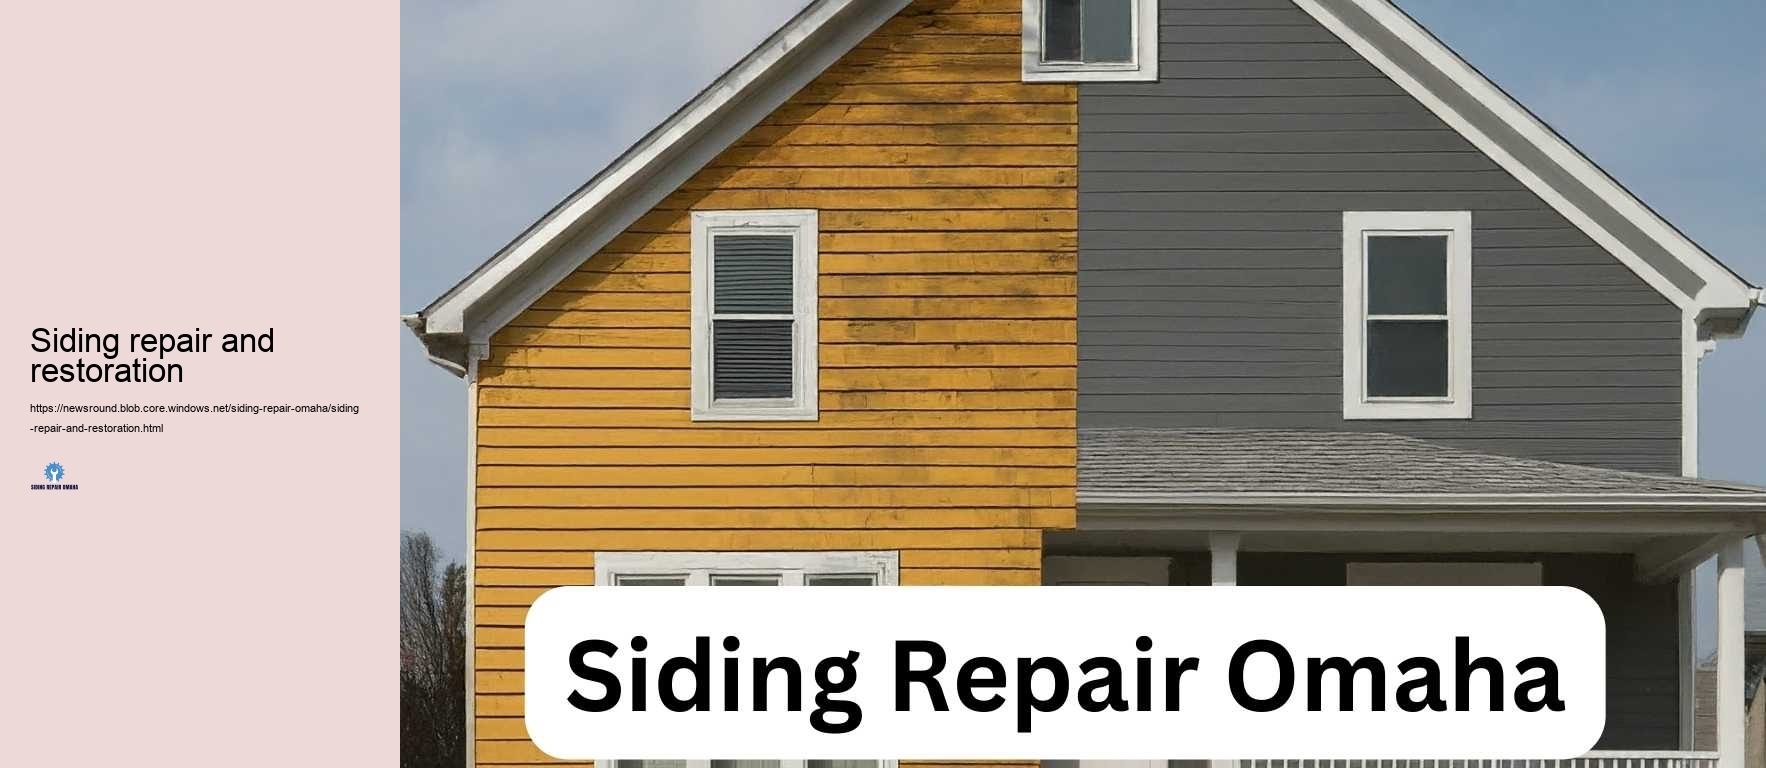 Siding repair and restoration